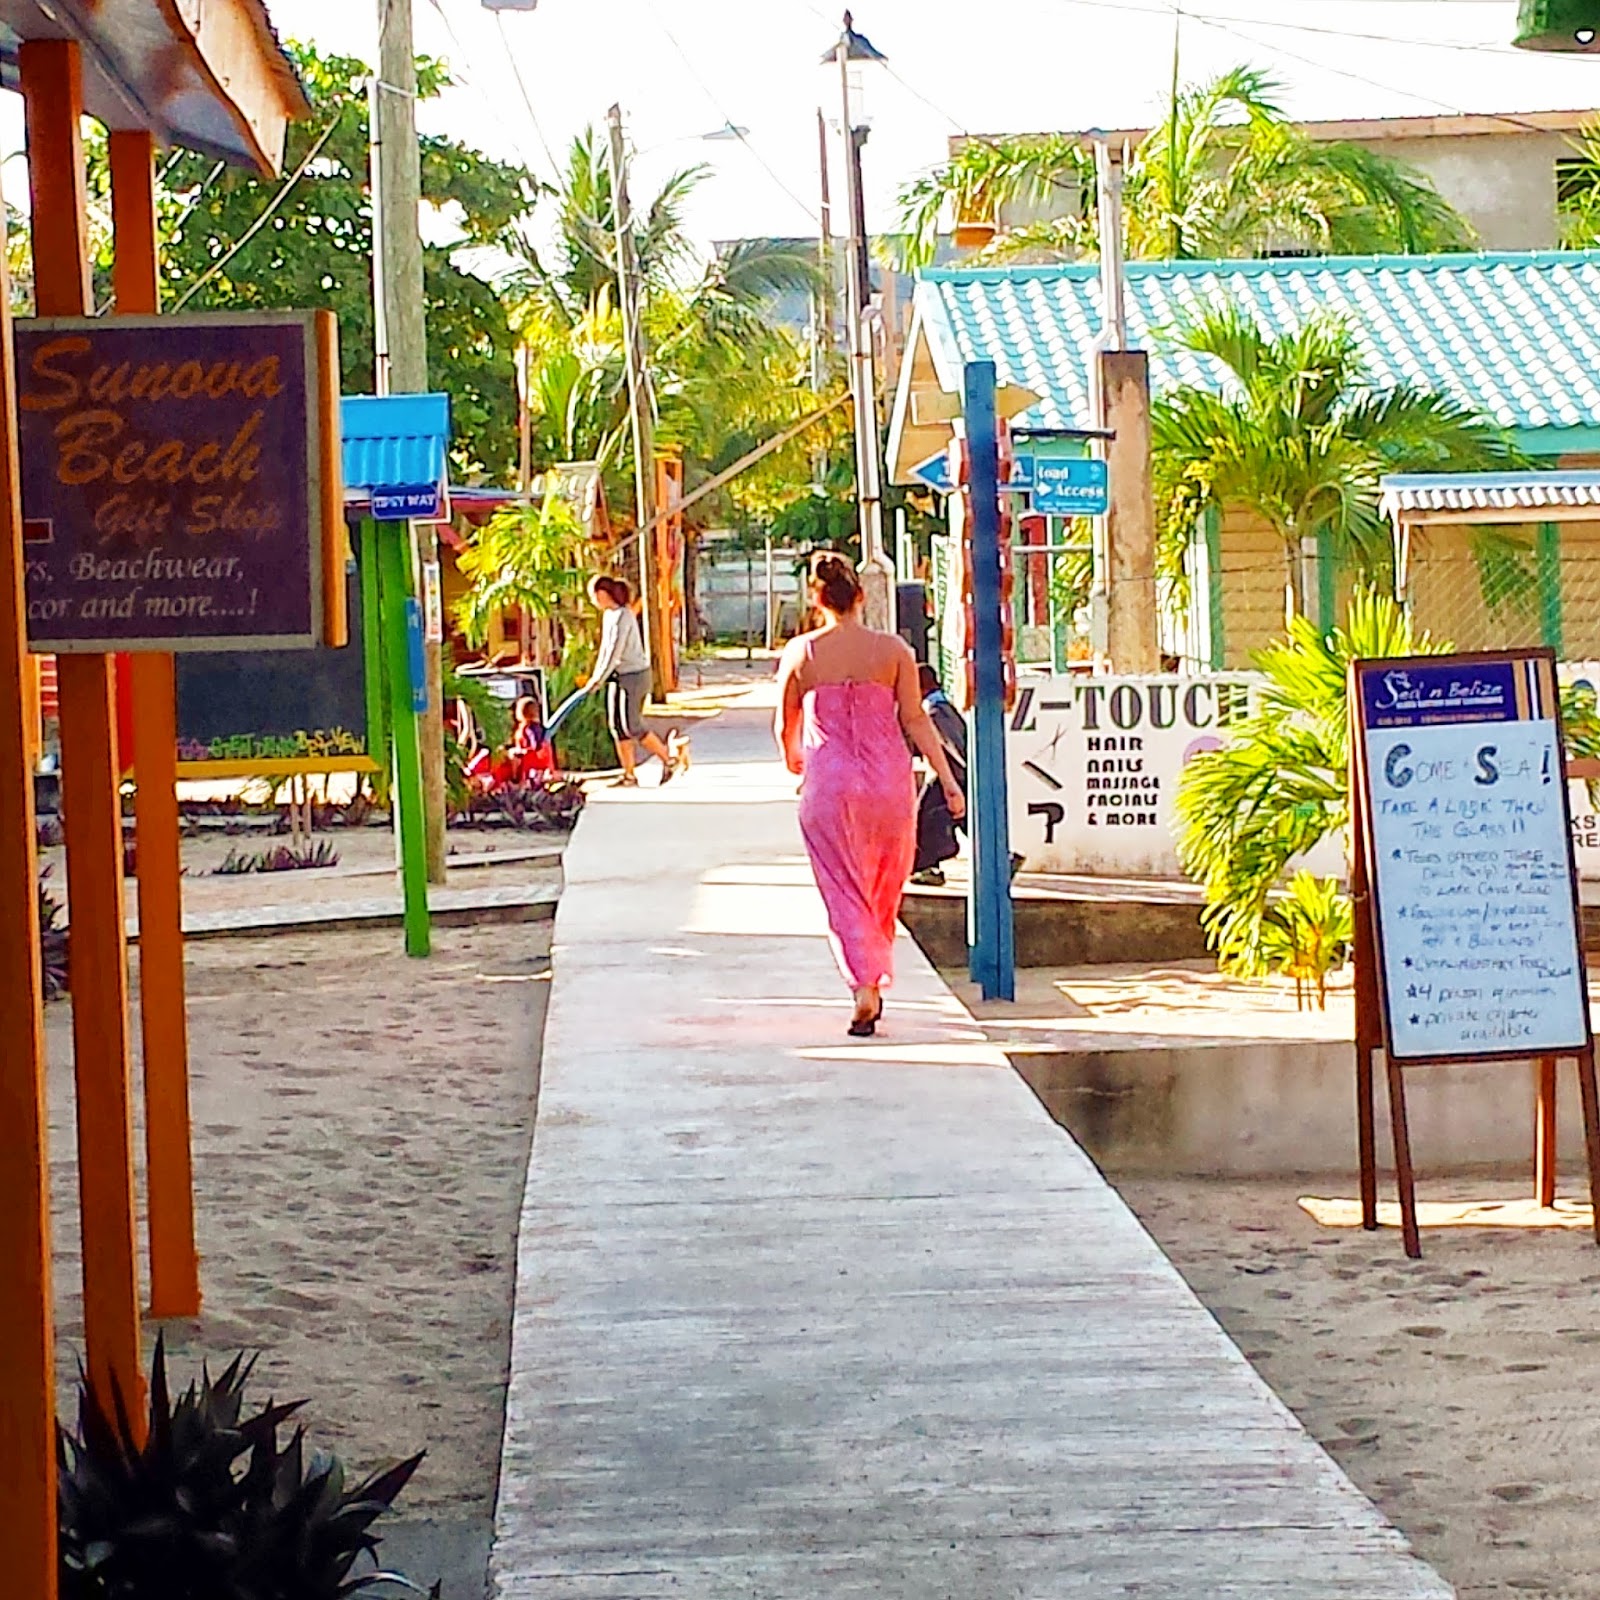 Remax Vip Belize: Sunova Beach Gift Shop 